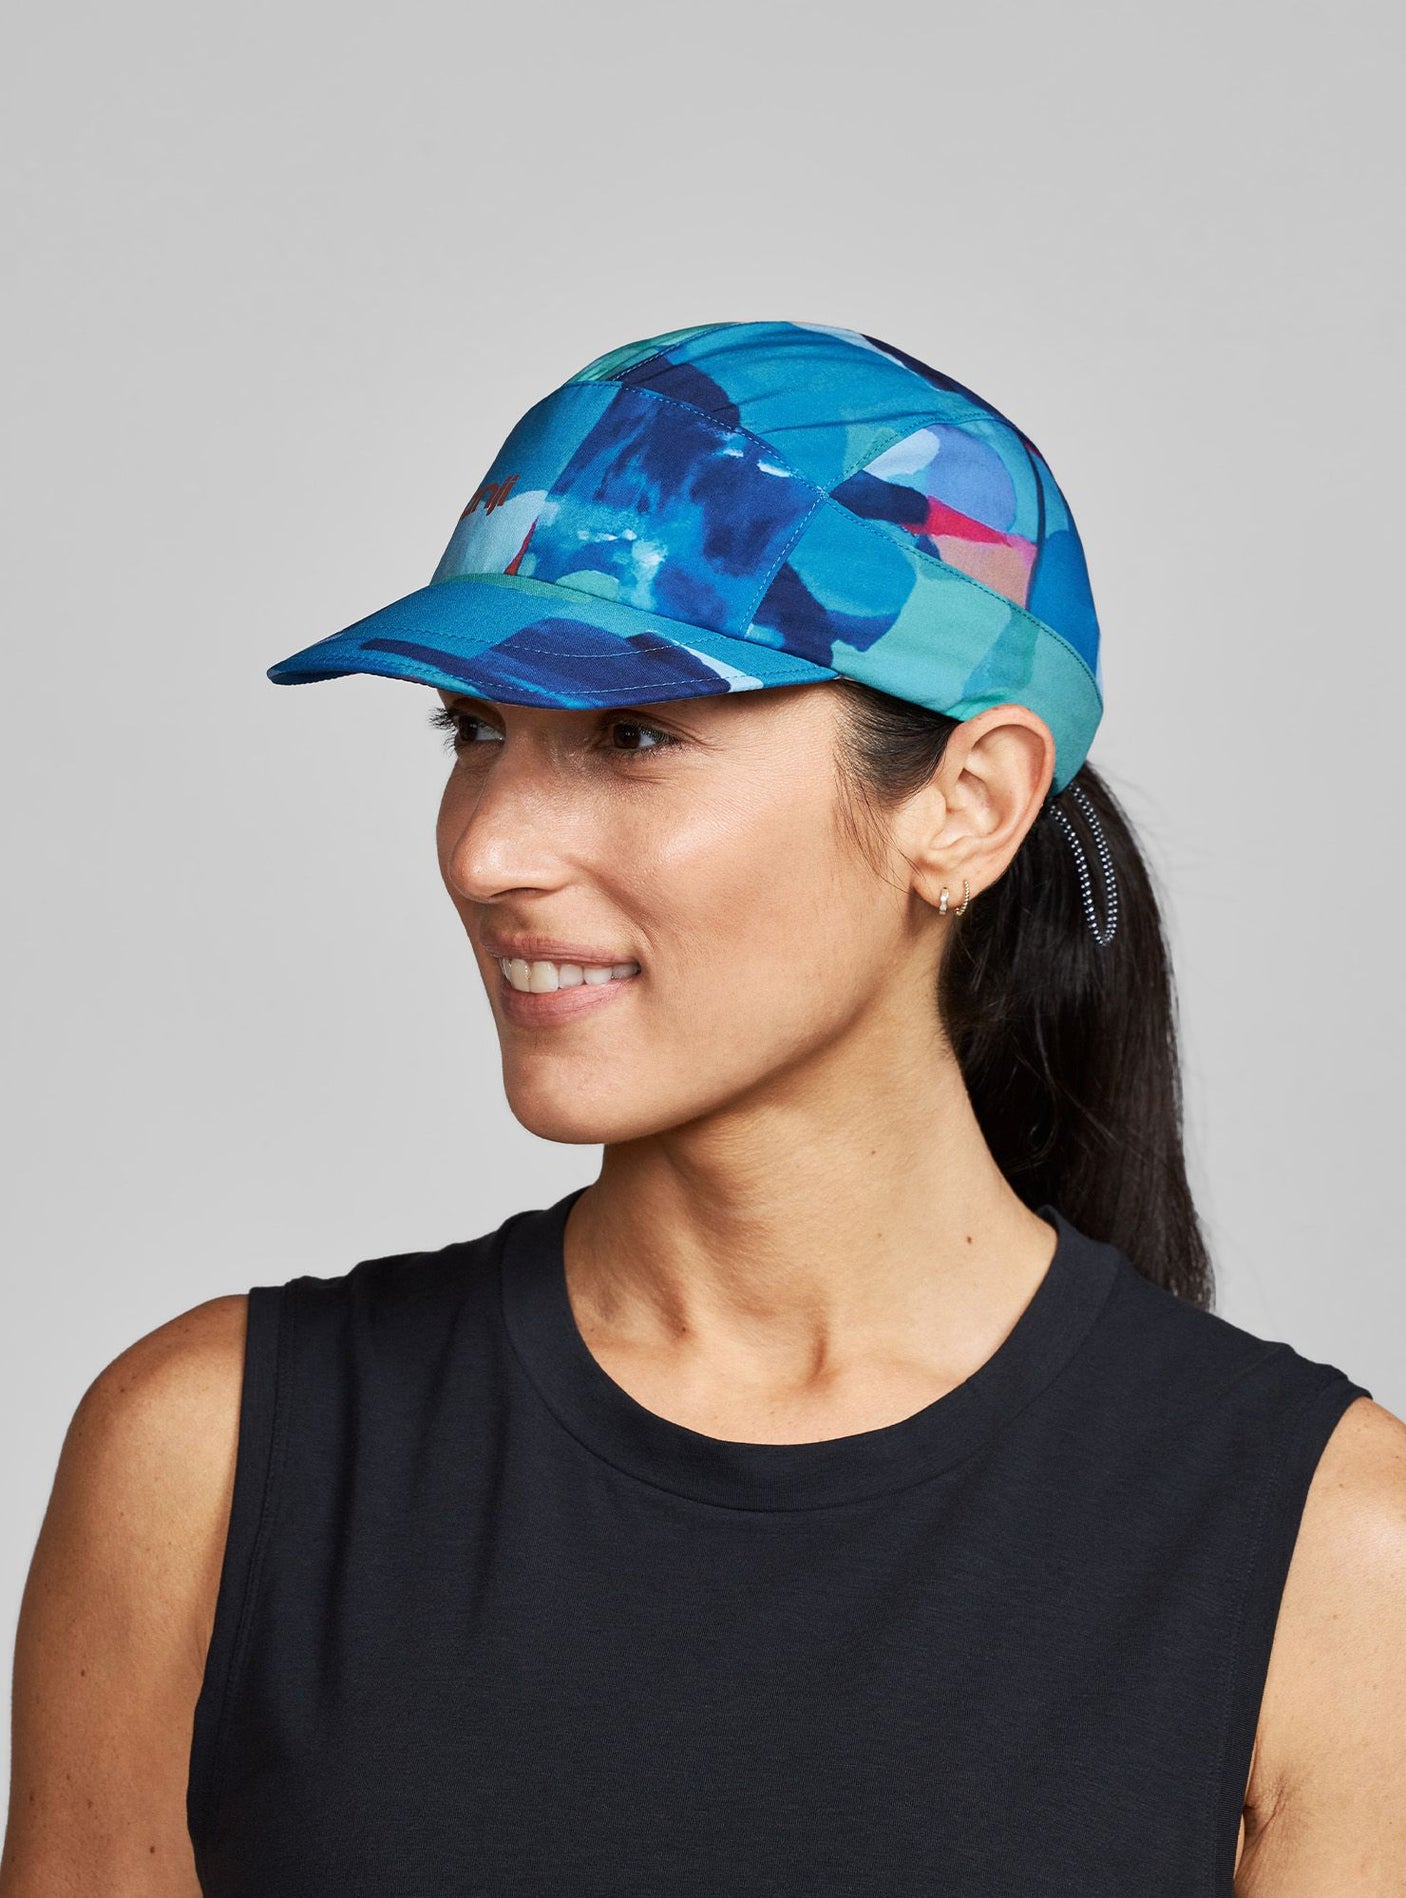 Janji AFO Hyperlight Cap worn by a woman on a neutral background.